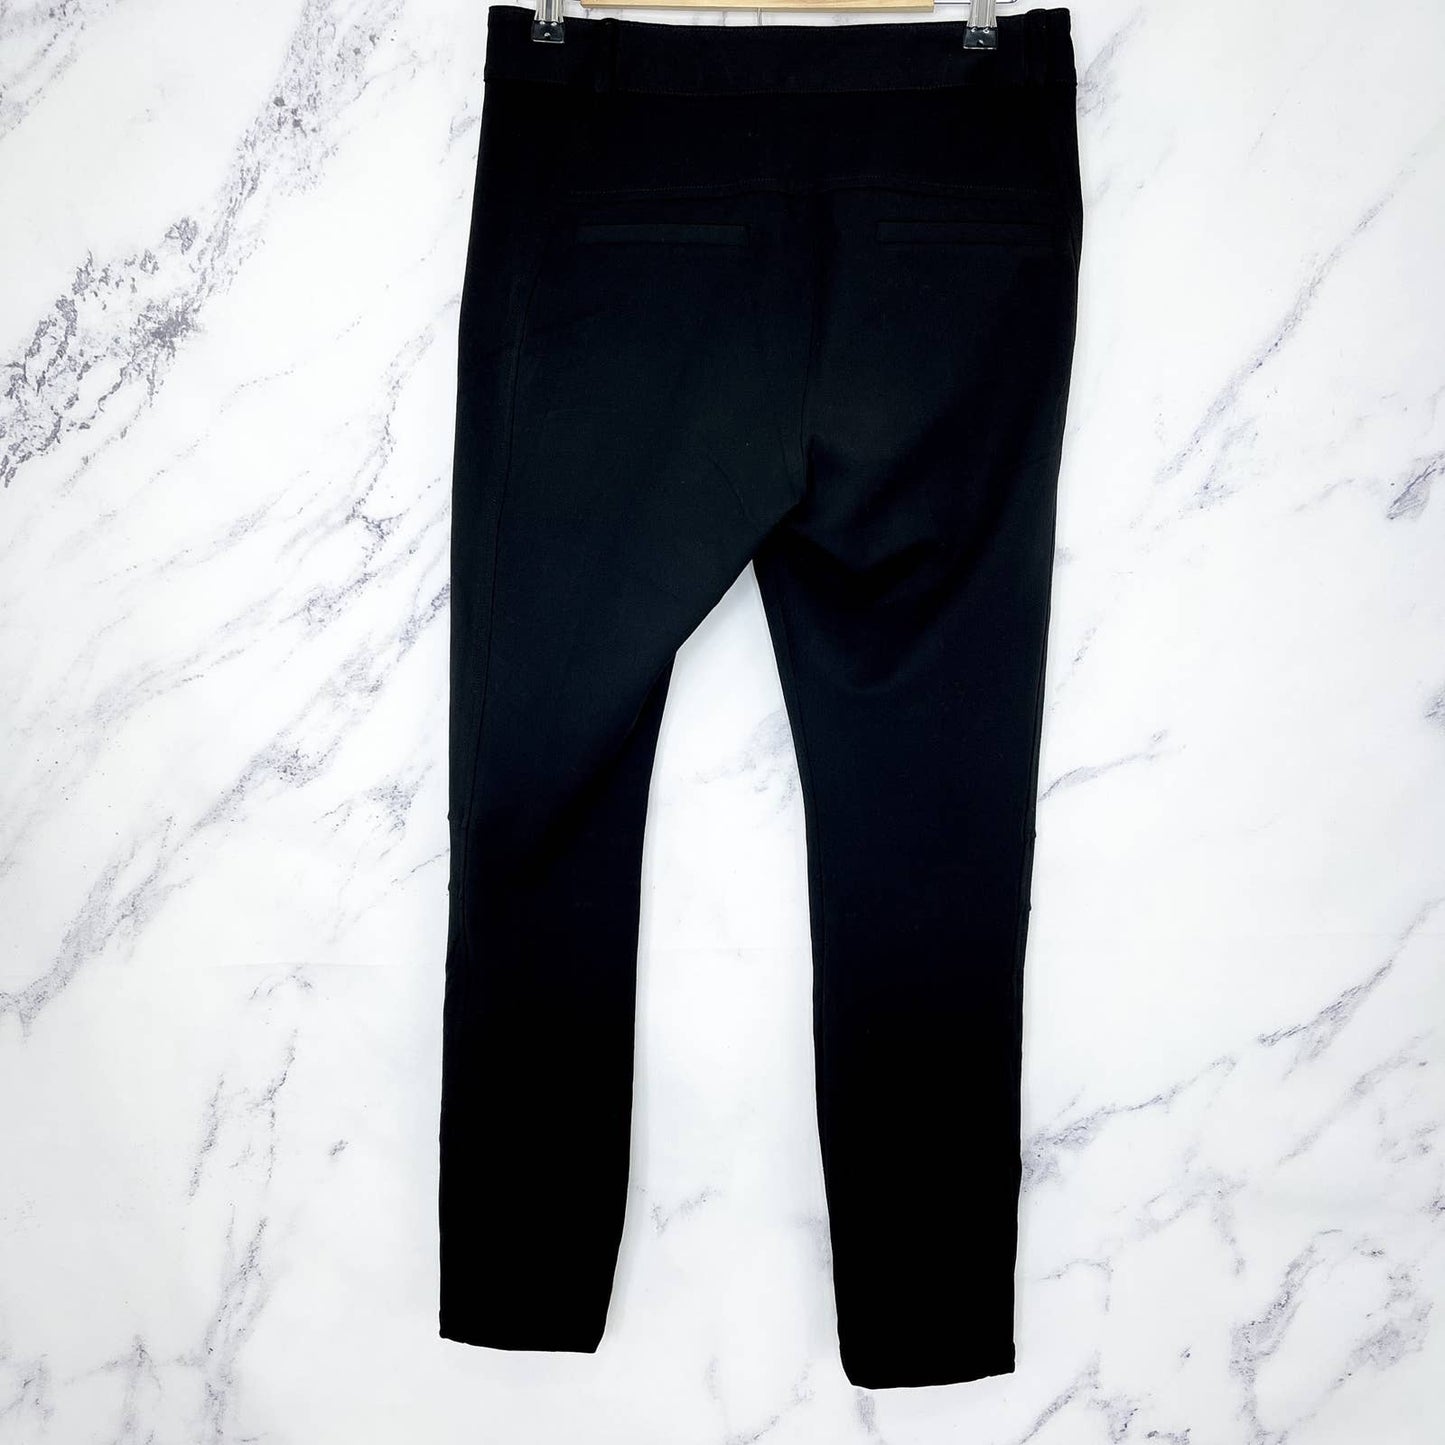 Veronica Beard | Ash Seamed Skinny Pants w/ Exposed Zippers | Sz 8